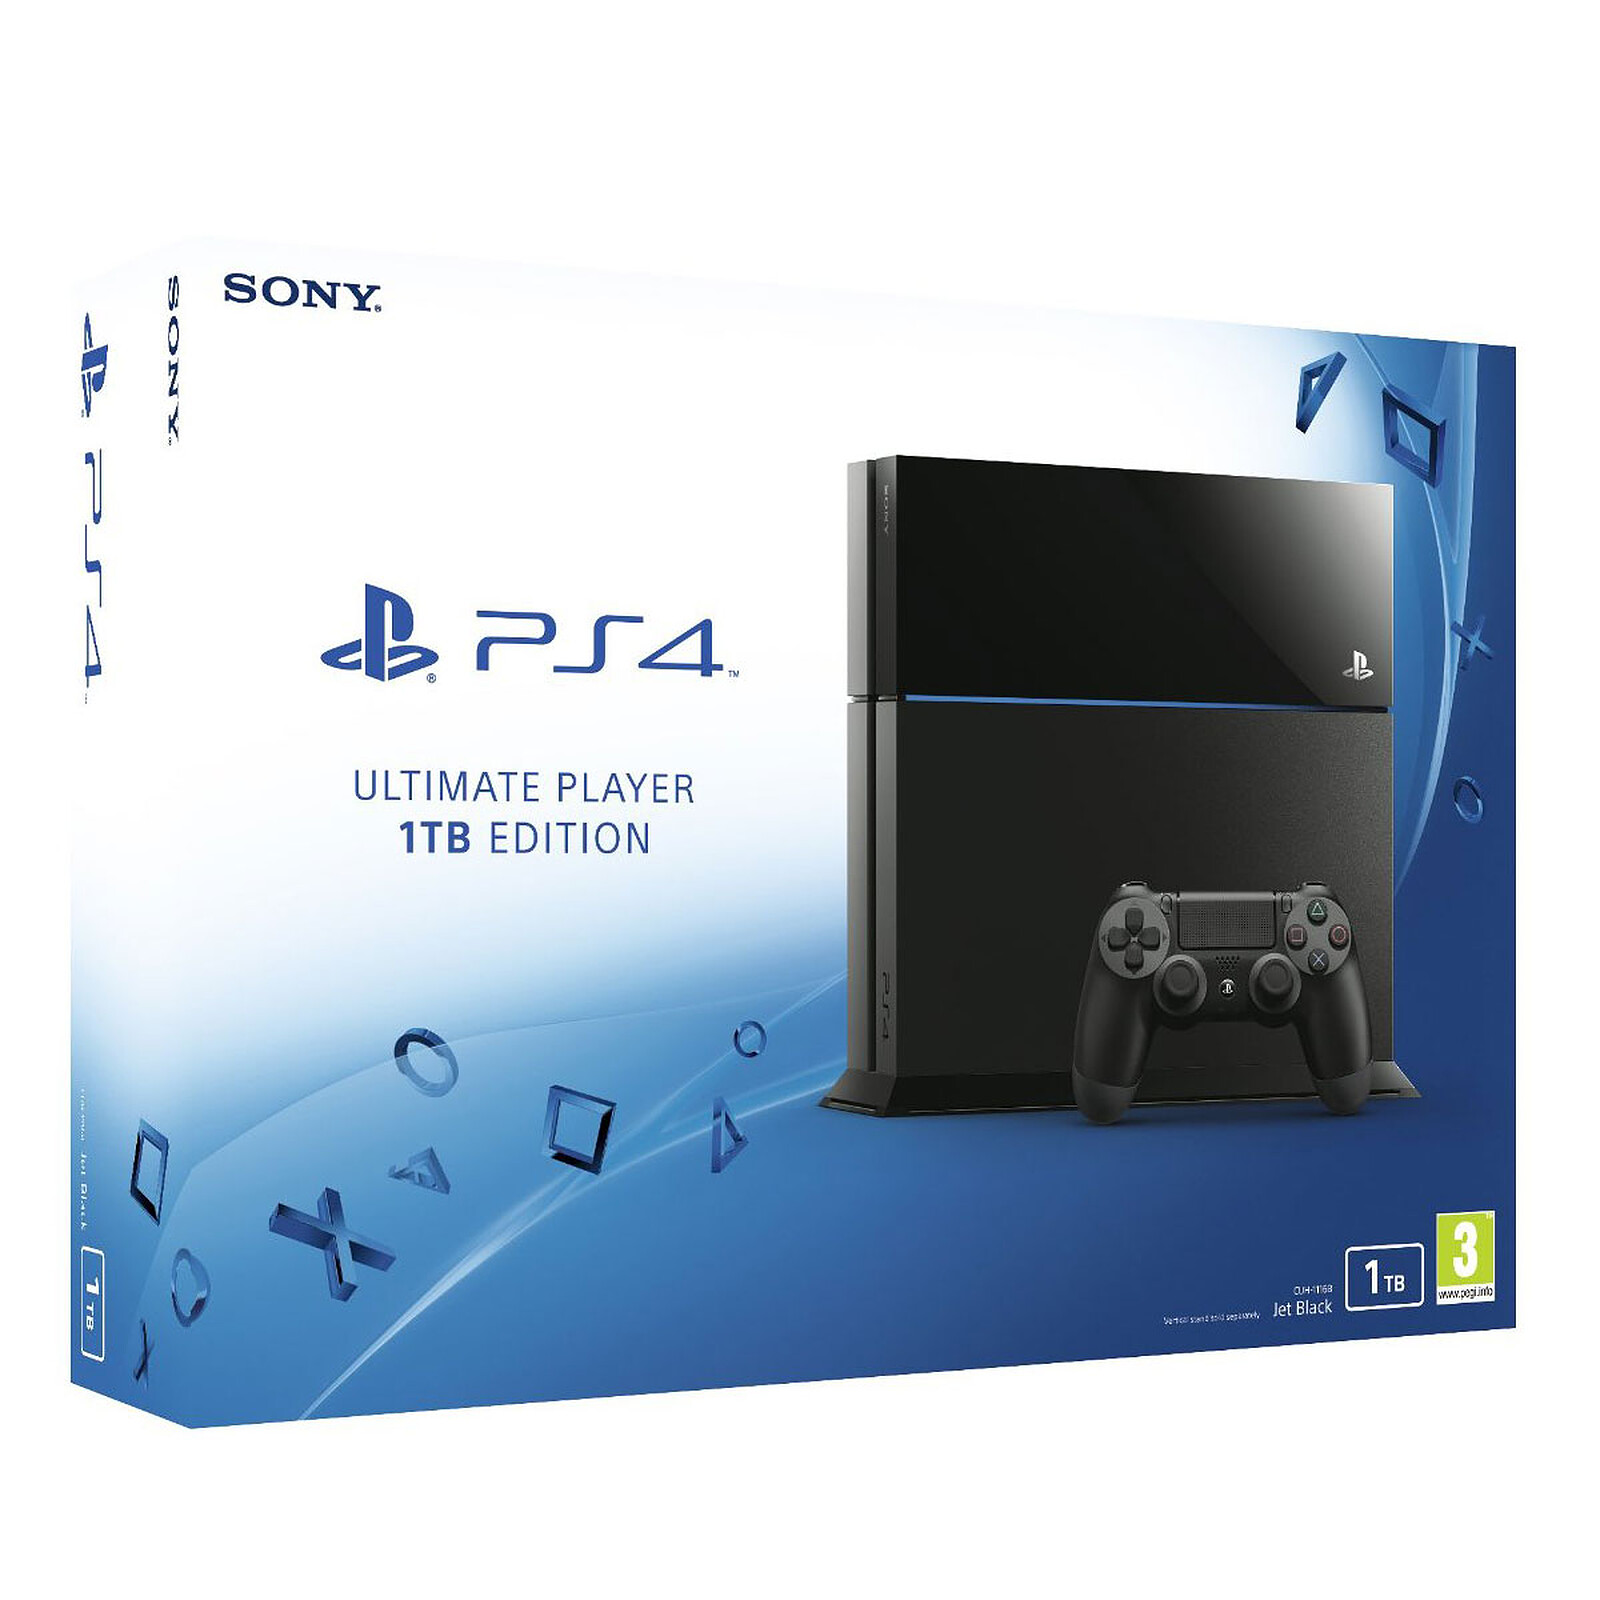 Sony PlayStation 4 Slim (500 Go) + Fortnite + 2ème DualShock - Console PS4  - Garantie 3 ans LDLC